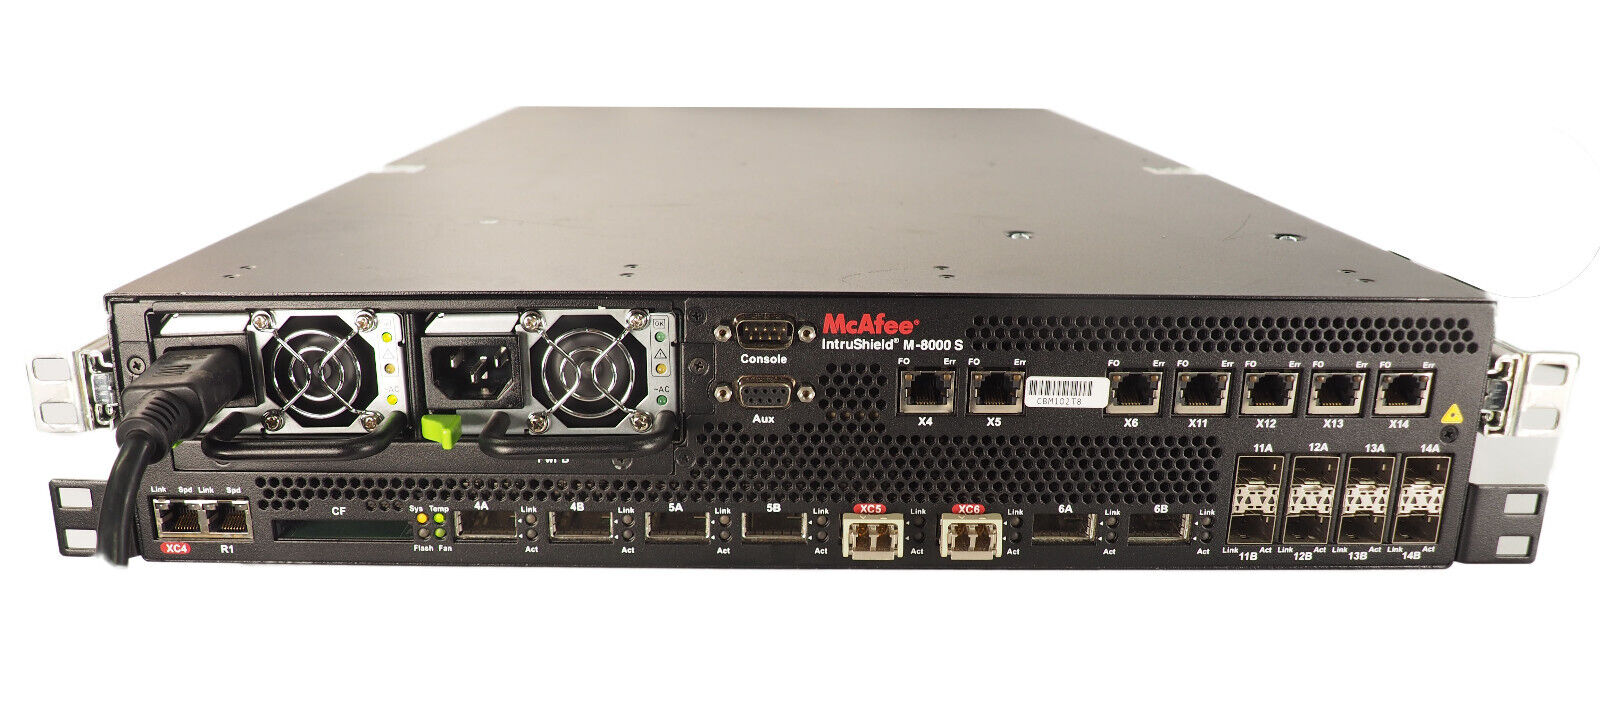 McAfee IntruShield M-8000 S Network Security Platform x3 Fans x2 450w PSUs 